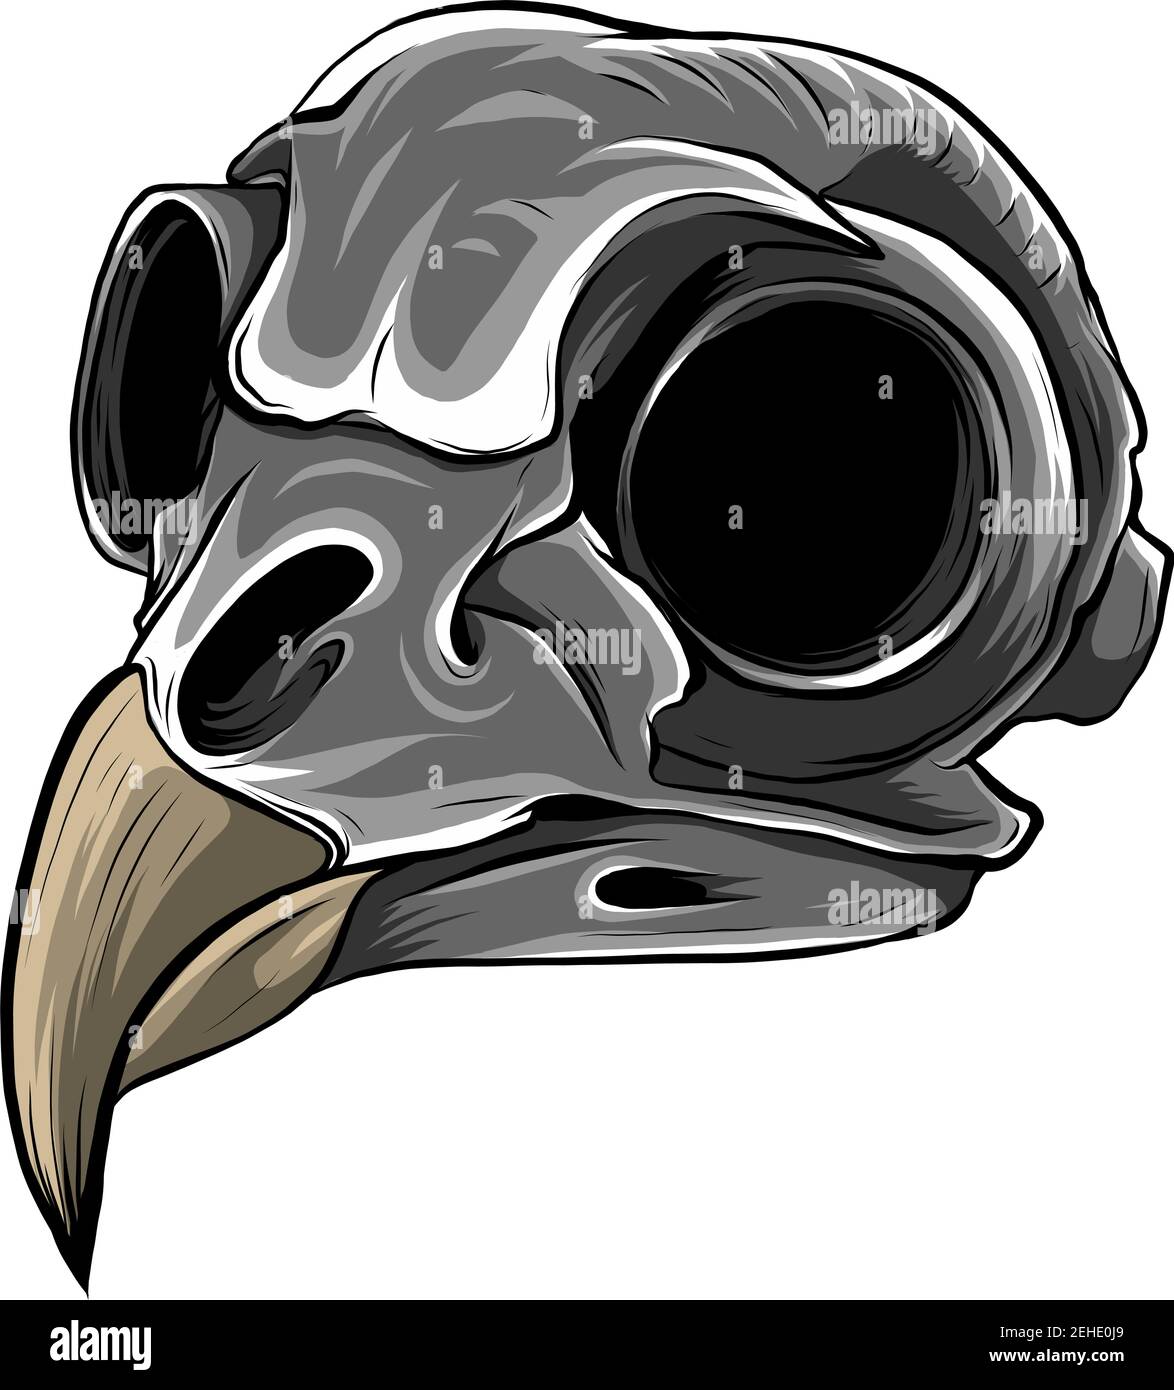 Realistic red bird skull. Illustration for designer on a white background. Stock Vector